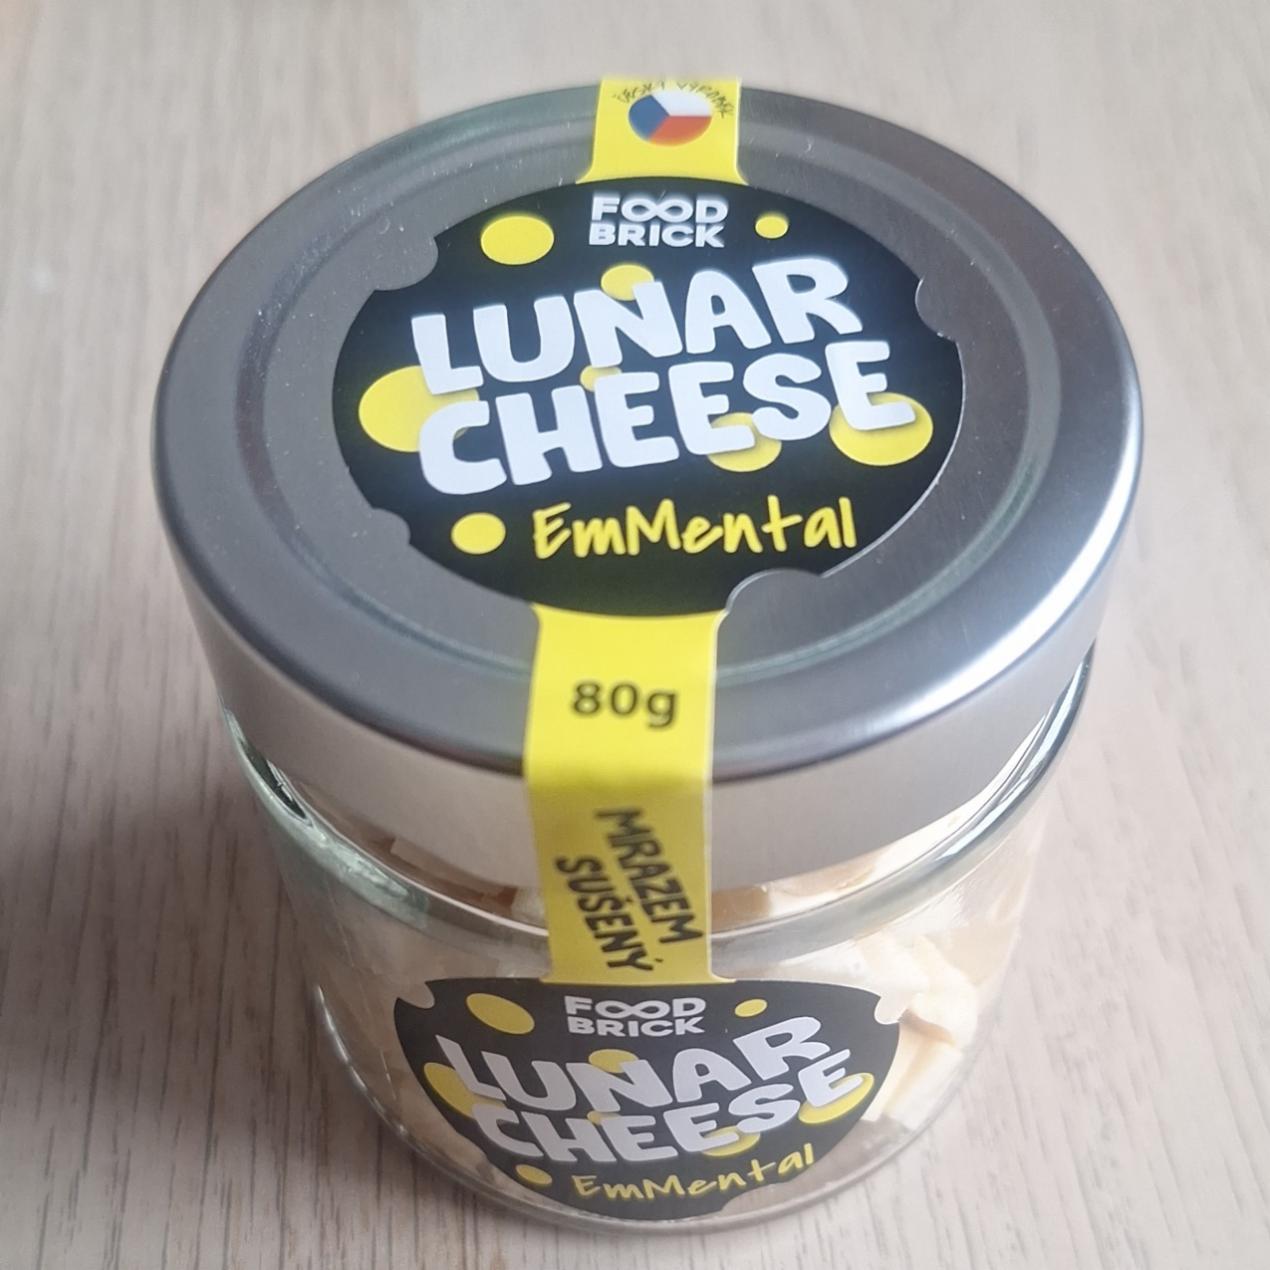 Fotografie - Lunar Cheese EmMental Food Brick